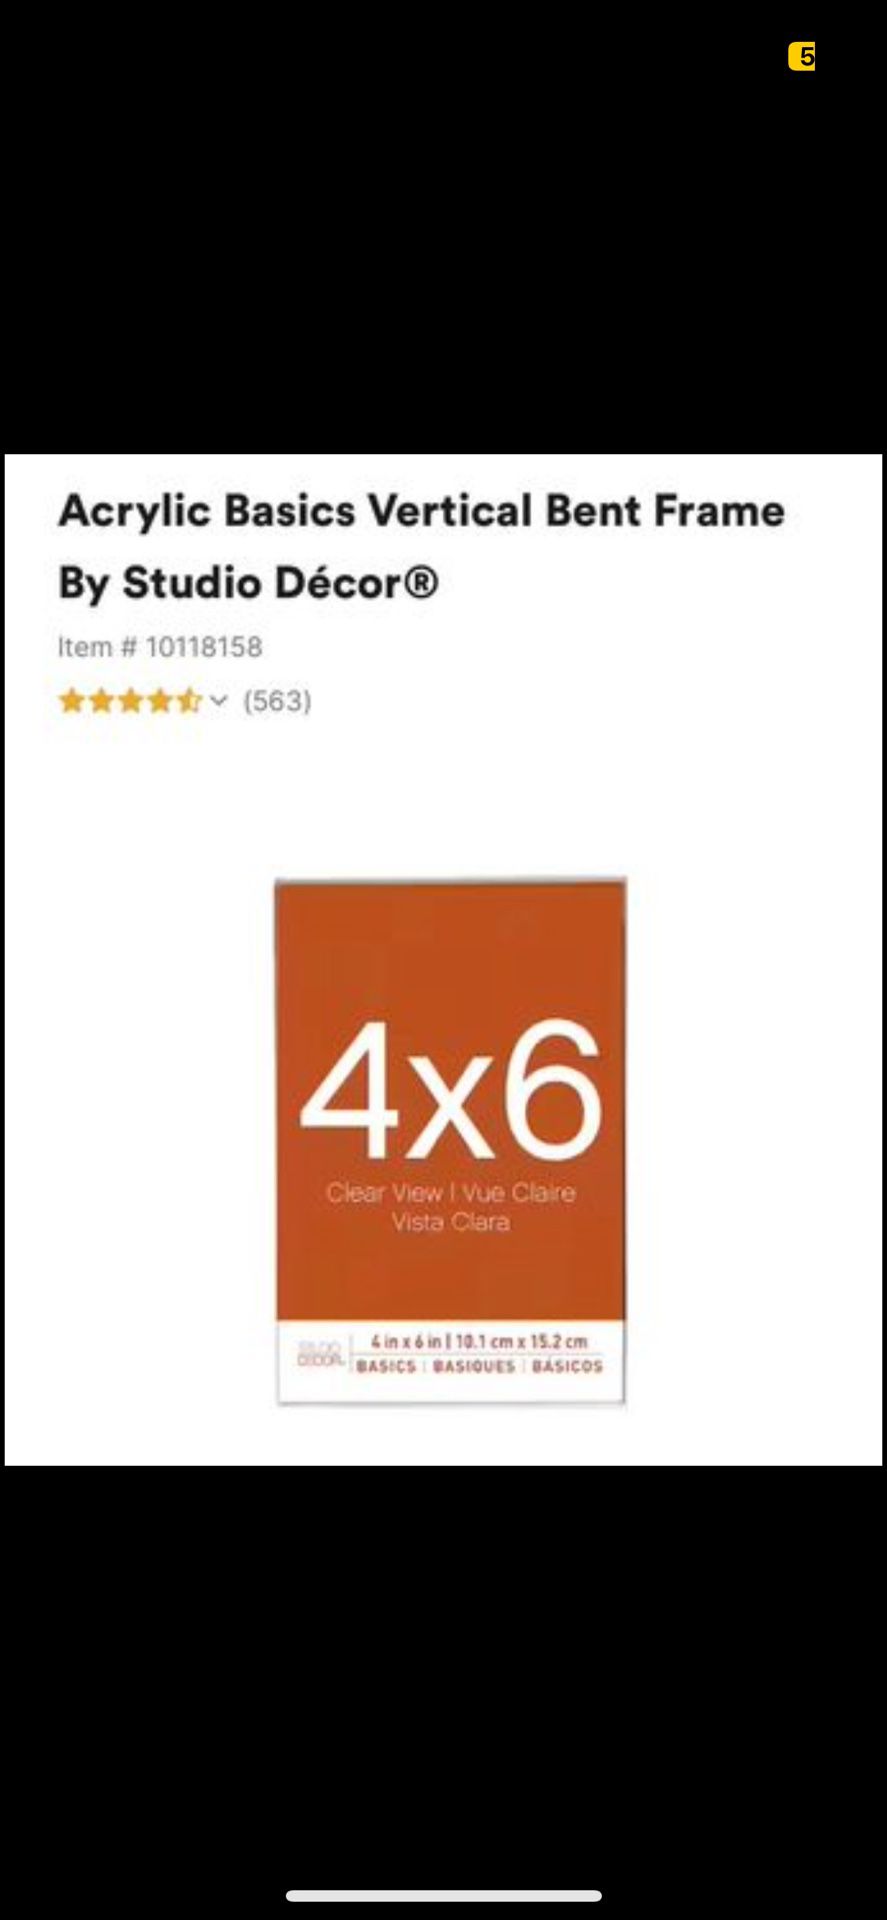 18 Count Acrylic Basics Vertical Bent Frame By Studio Décor